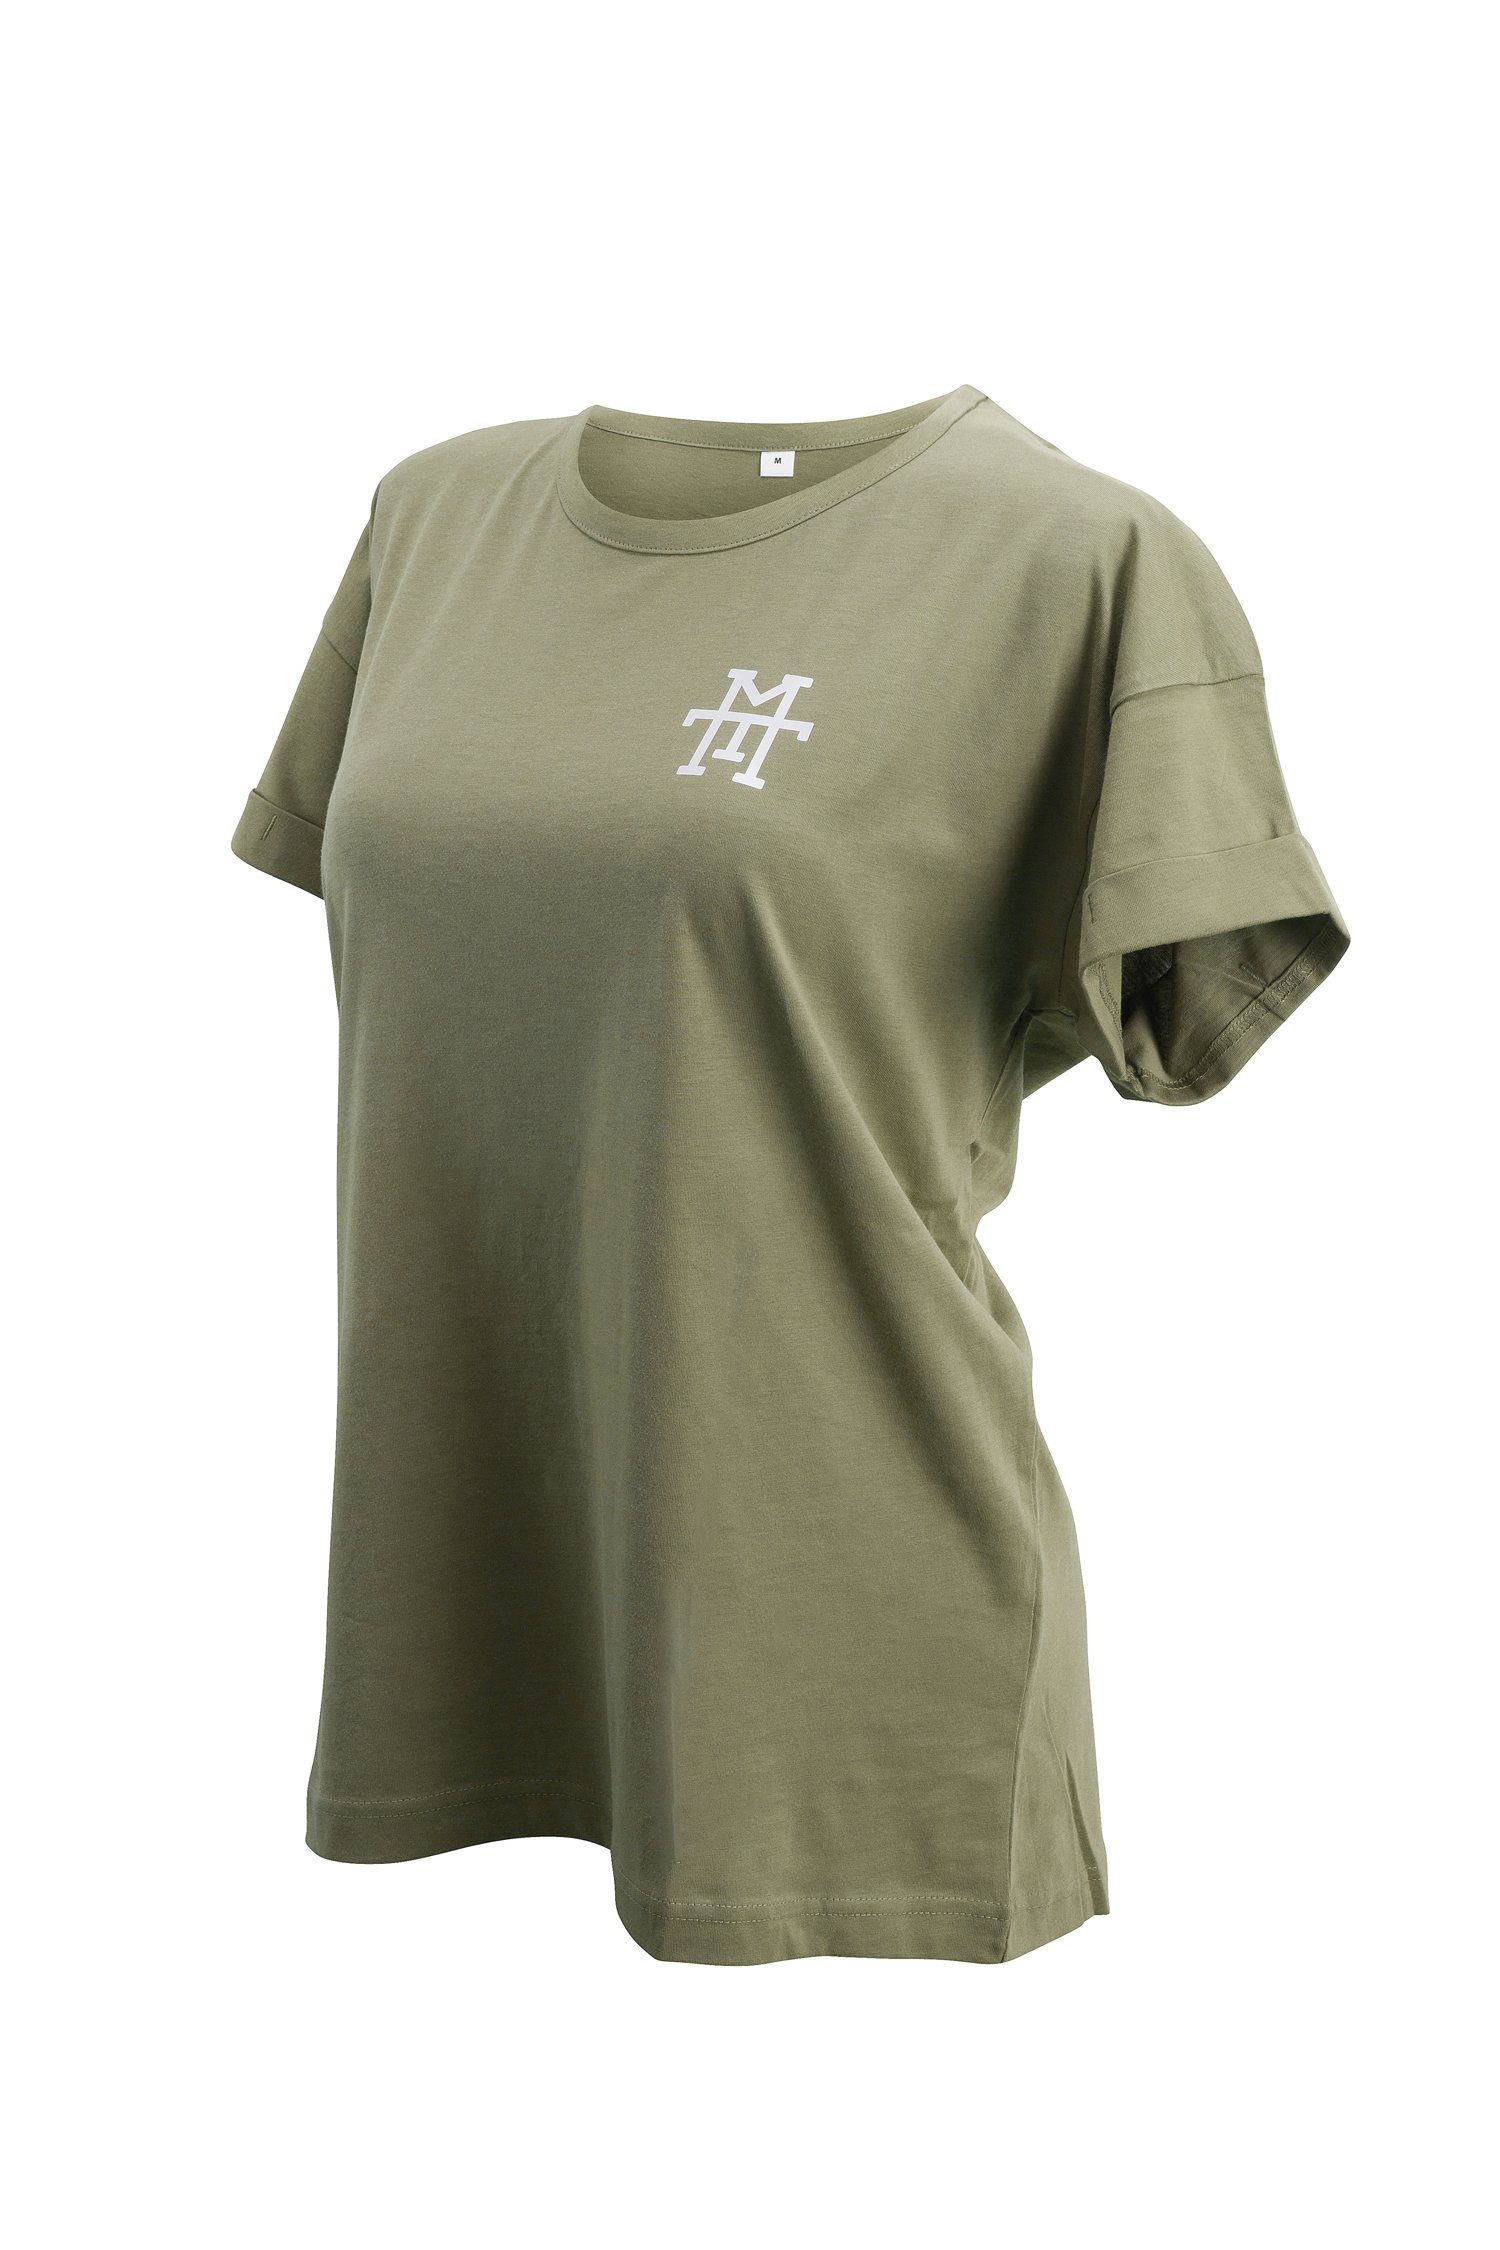 Manufaktur13 T-Shirt Boyfriend T-Shirt T-Shirt Olive Oversize - 100% Baumwolle